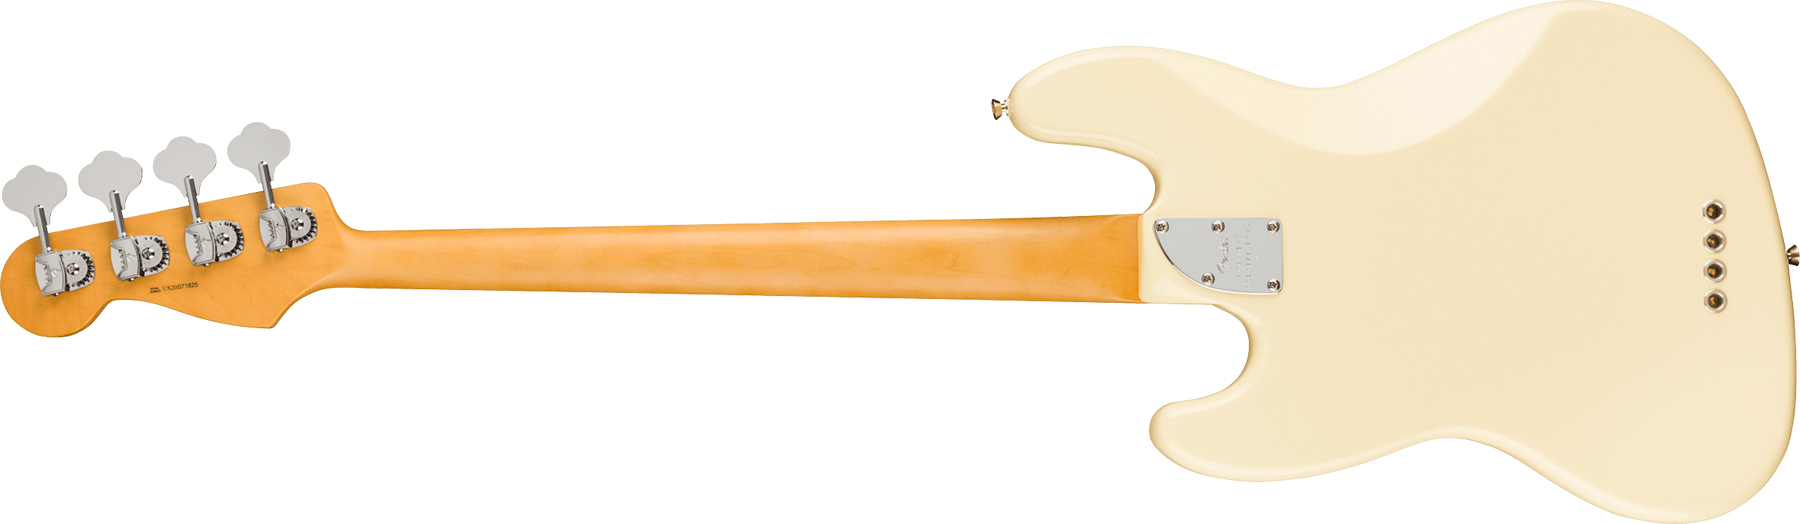 Fender Jazz Bass American Professional Ii Usa Mn - Olympic White - Bajo eléctrico de cuerpo sólido - Variation 2